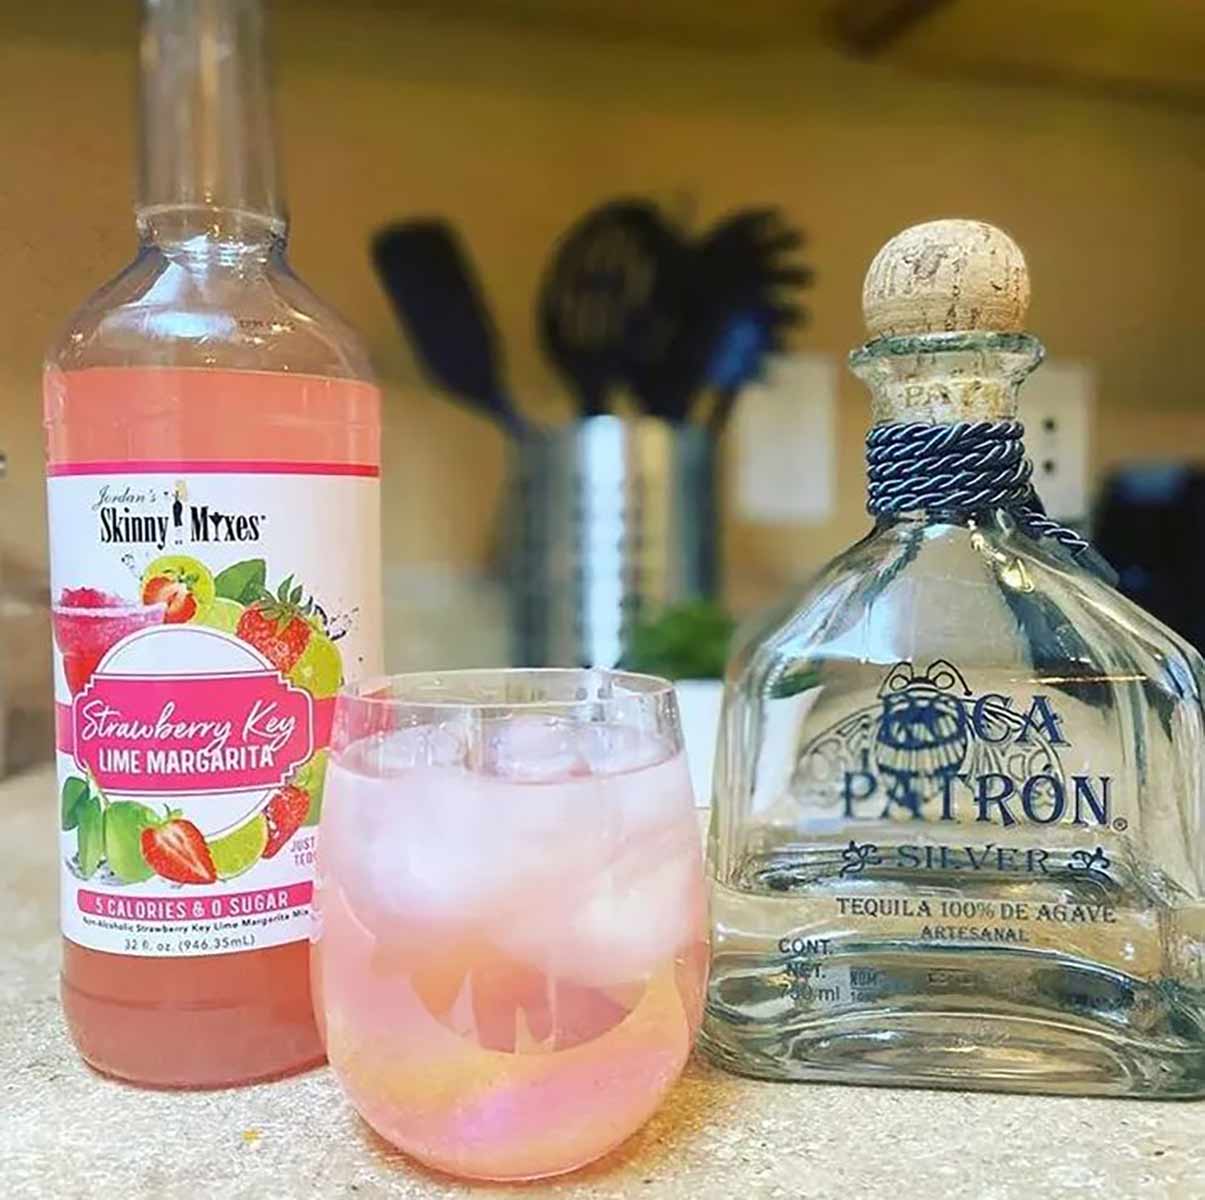 Skinny Strawberry Key Lime Margarita Mix - Skinny Mixes